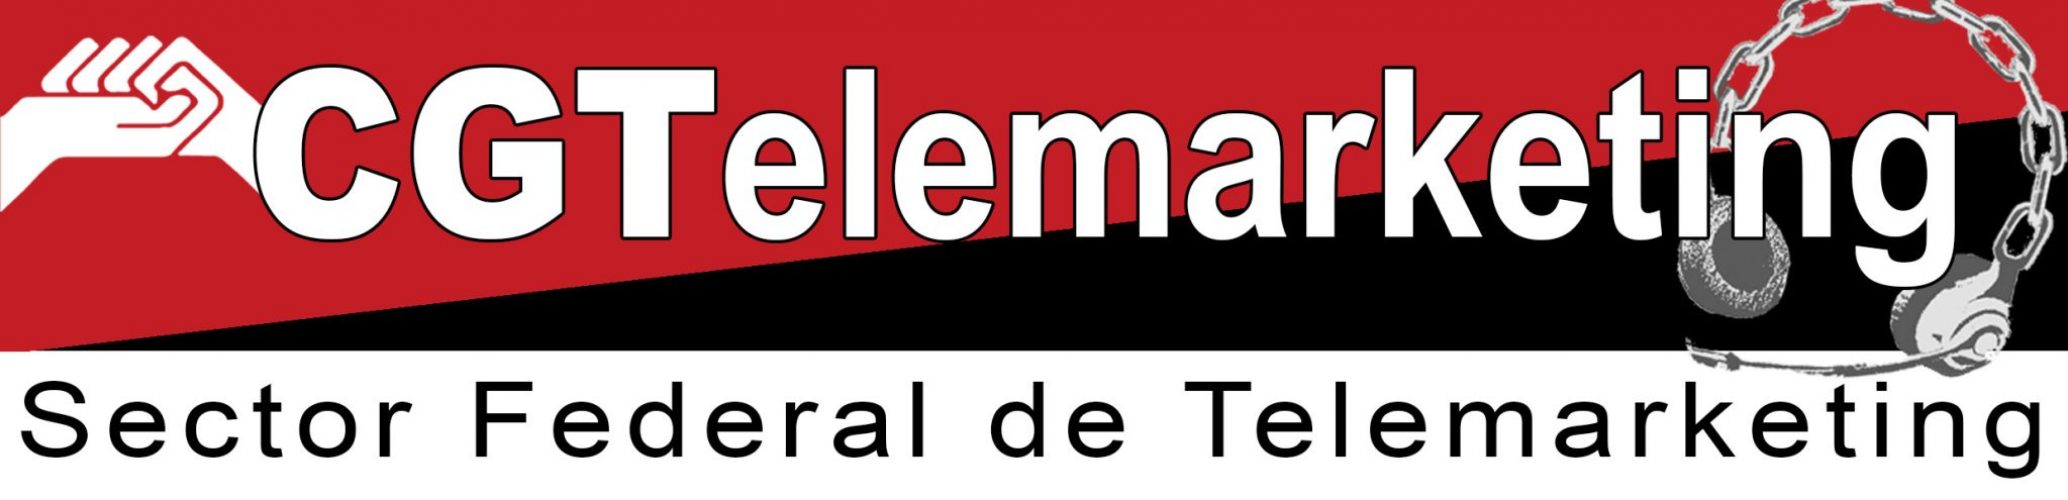 Logotipo-CGT-Telemarketing-2048x495